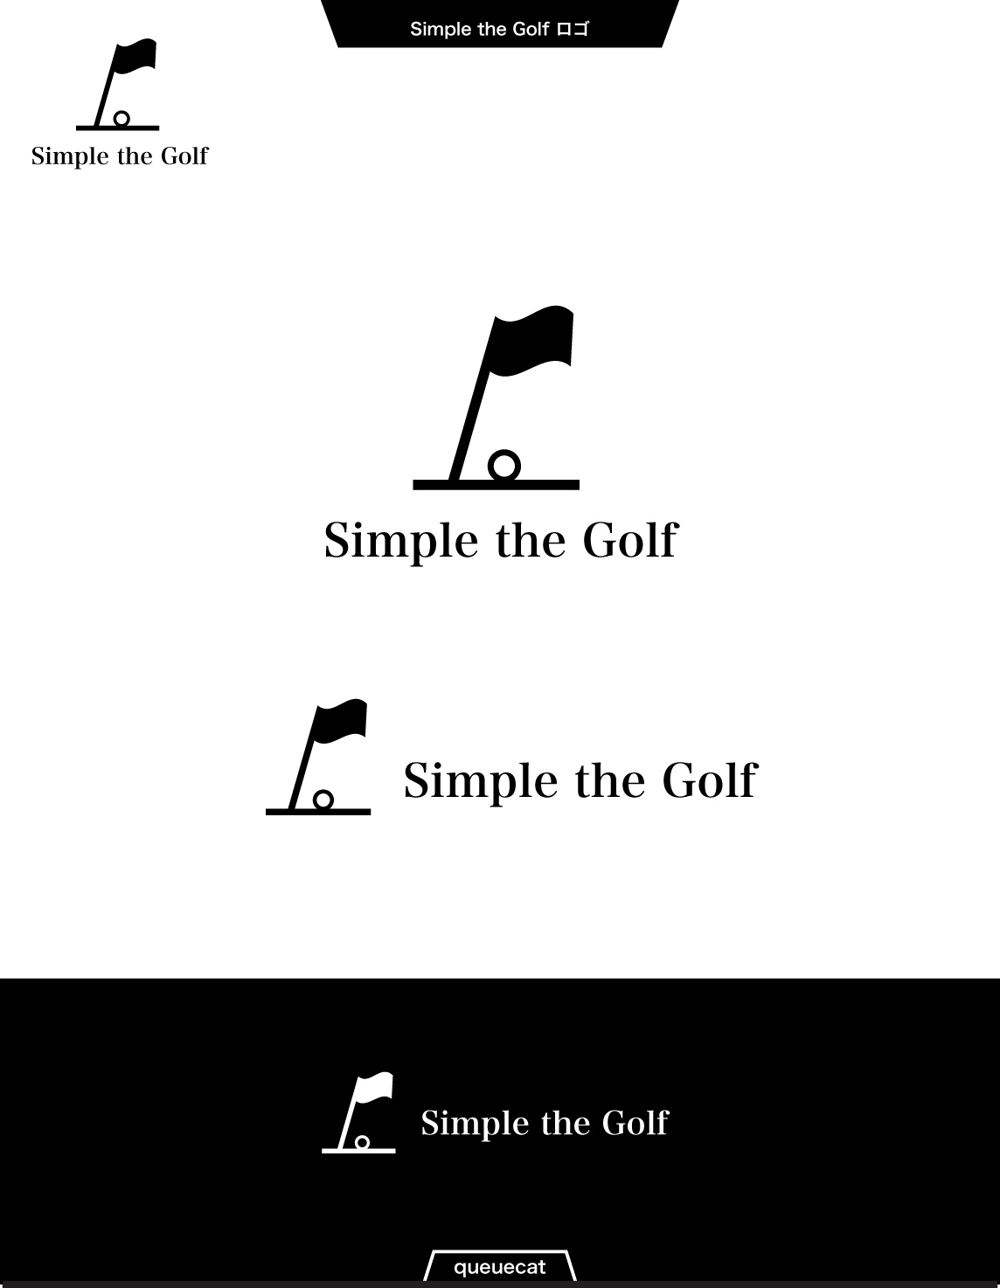 Simple the Golf3_1.jpg